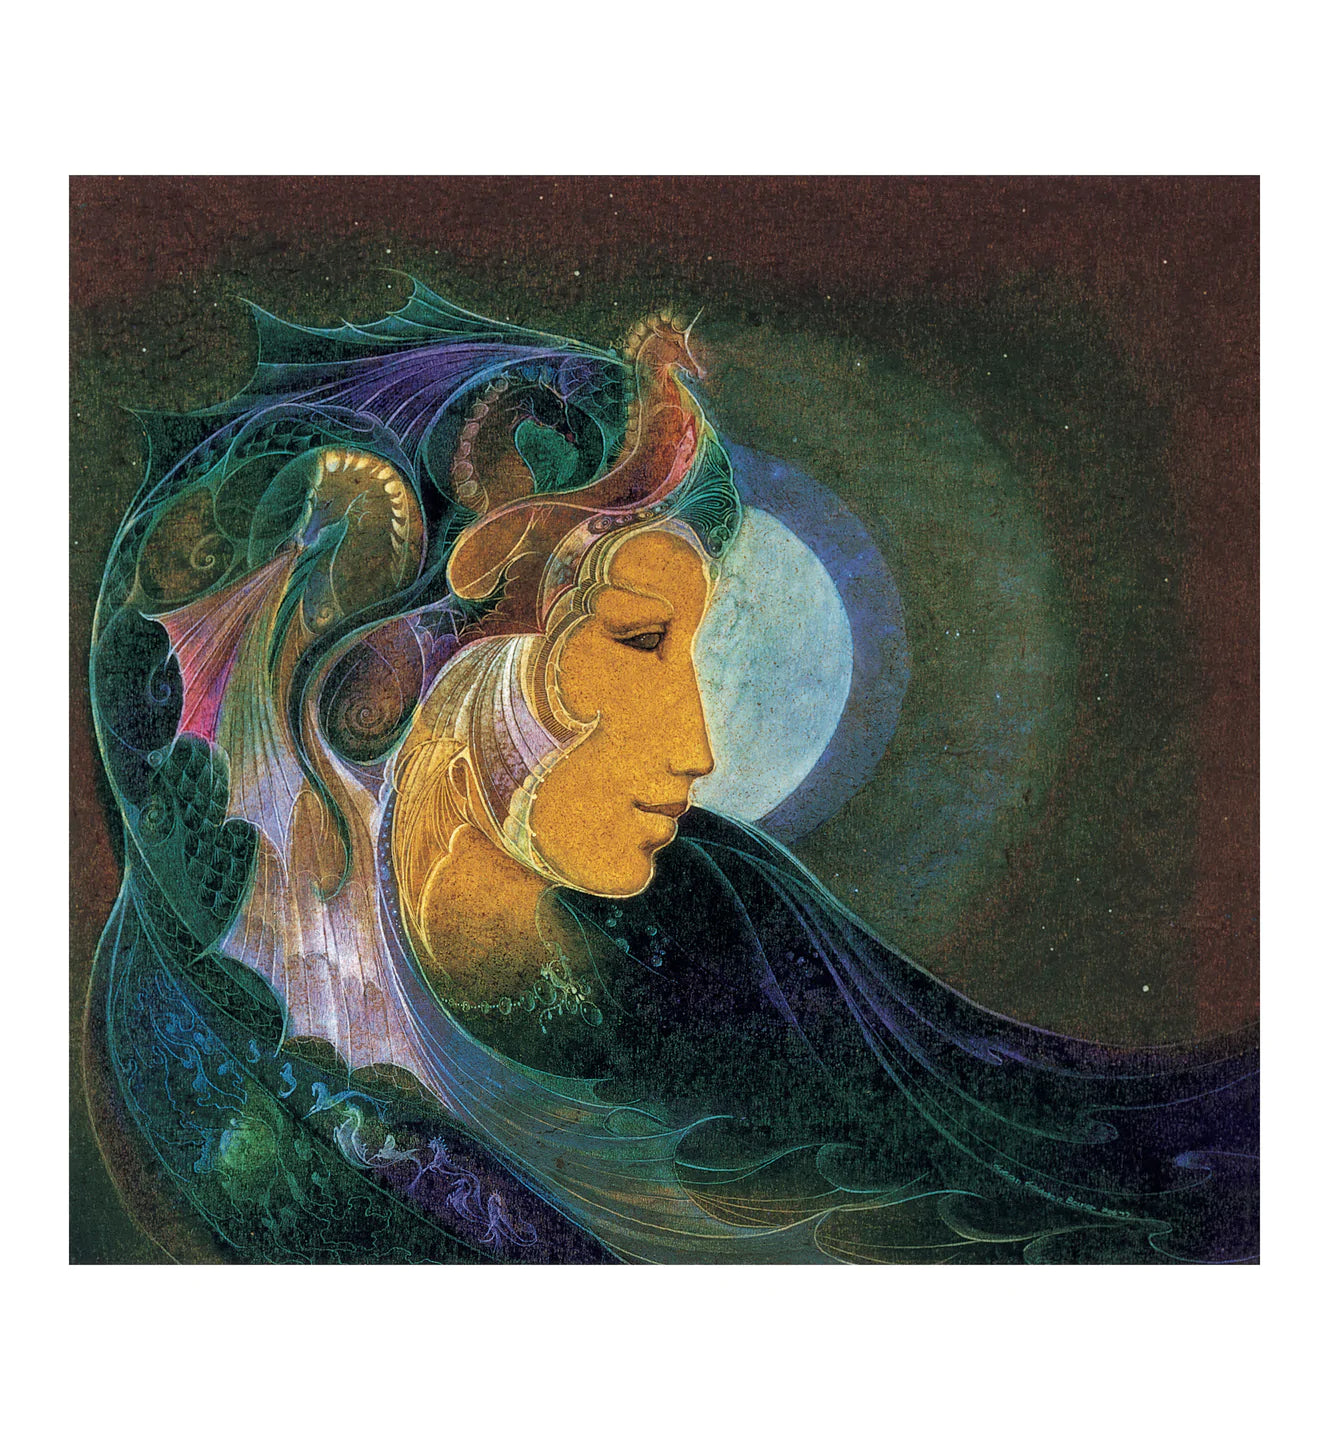 2023 Goddesses: Paintings by Susan Seddon Boulet - Square Wall Calendar